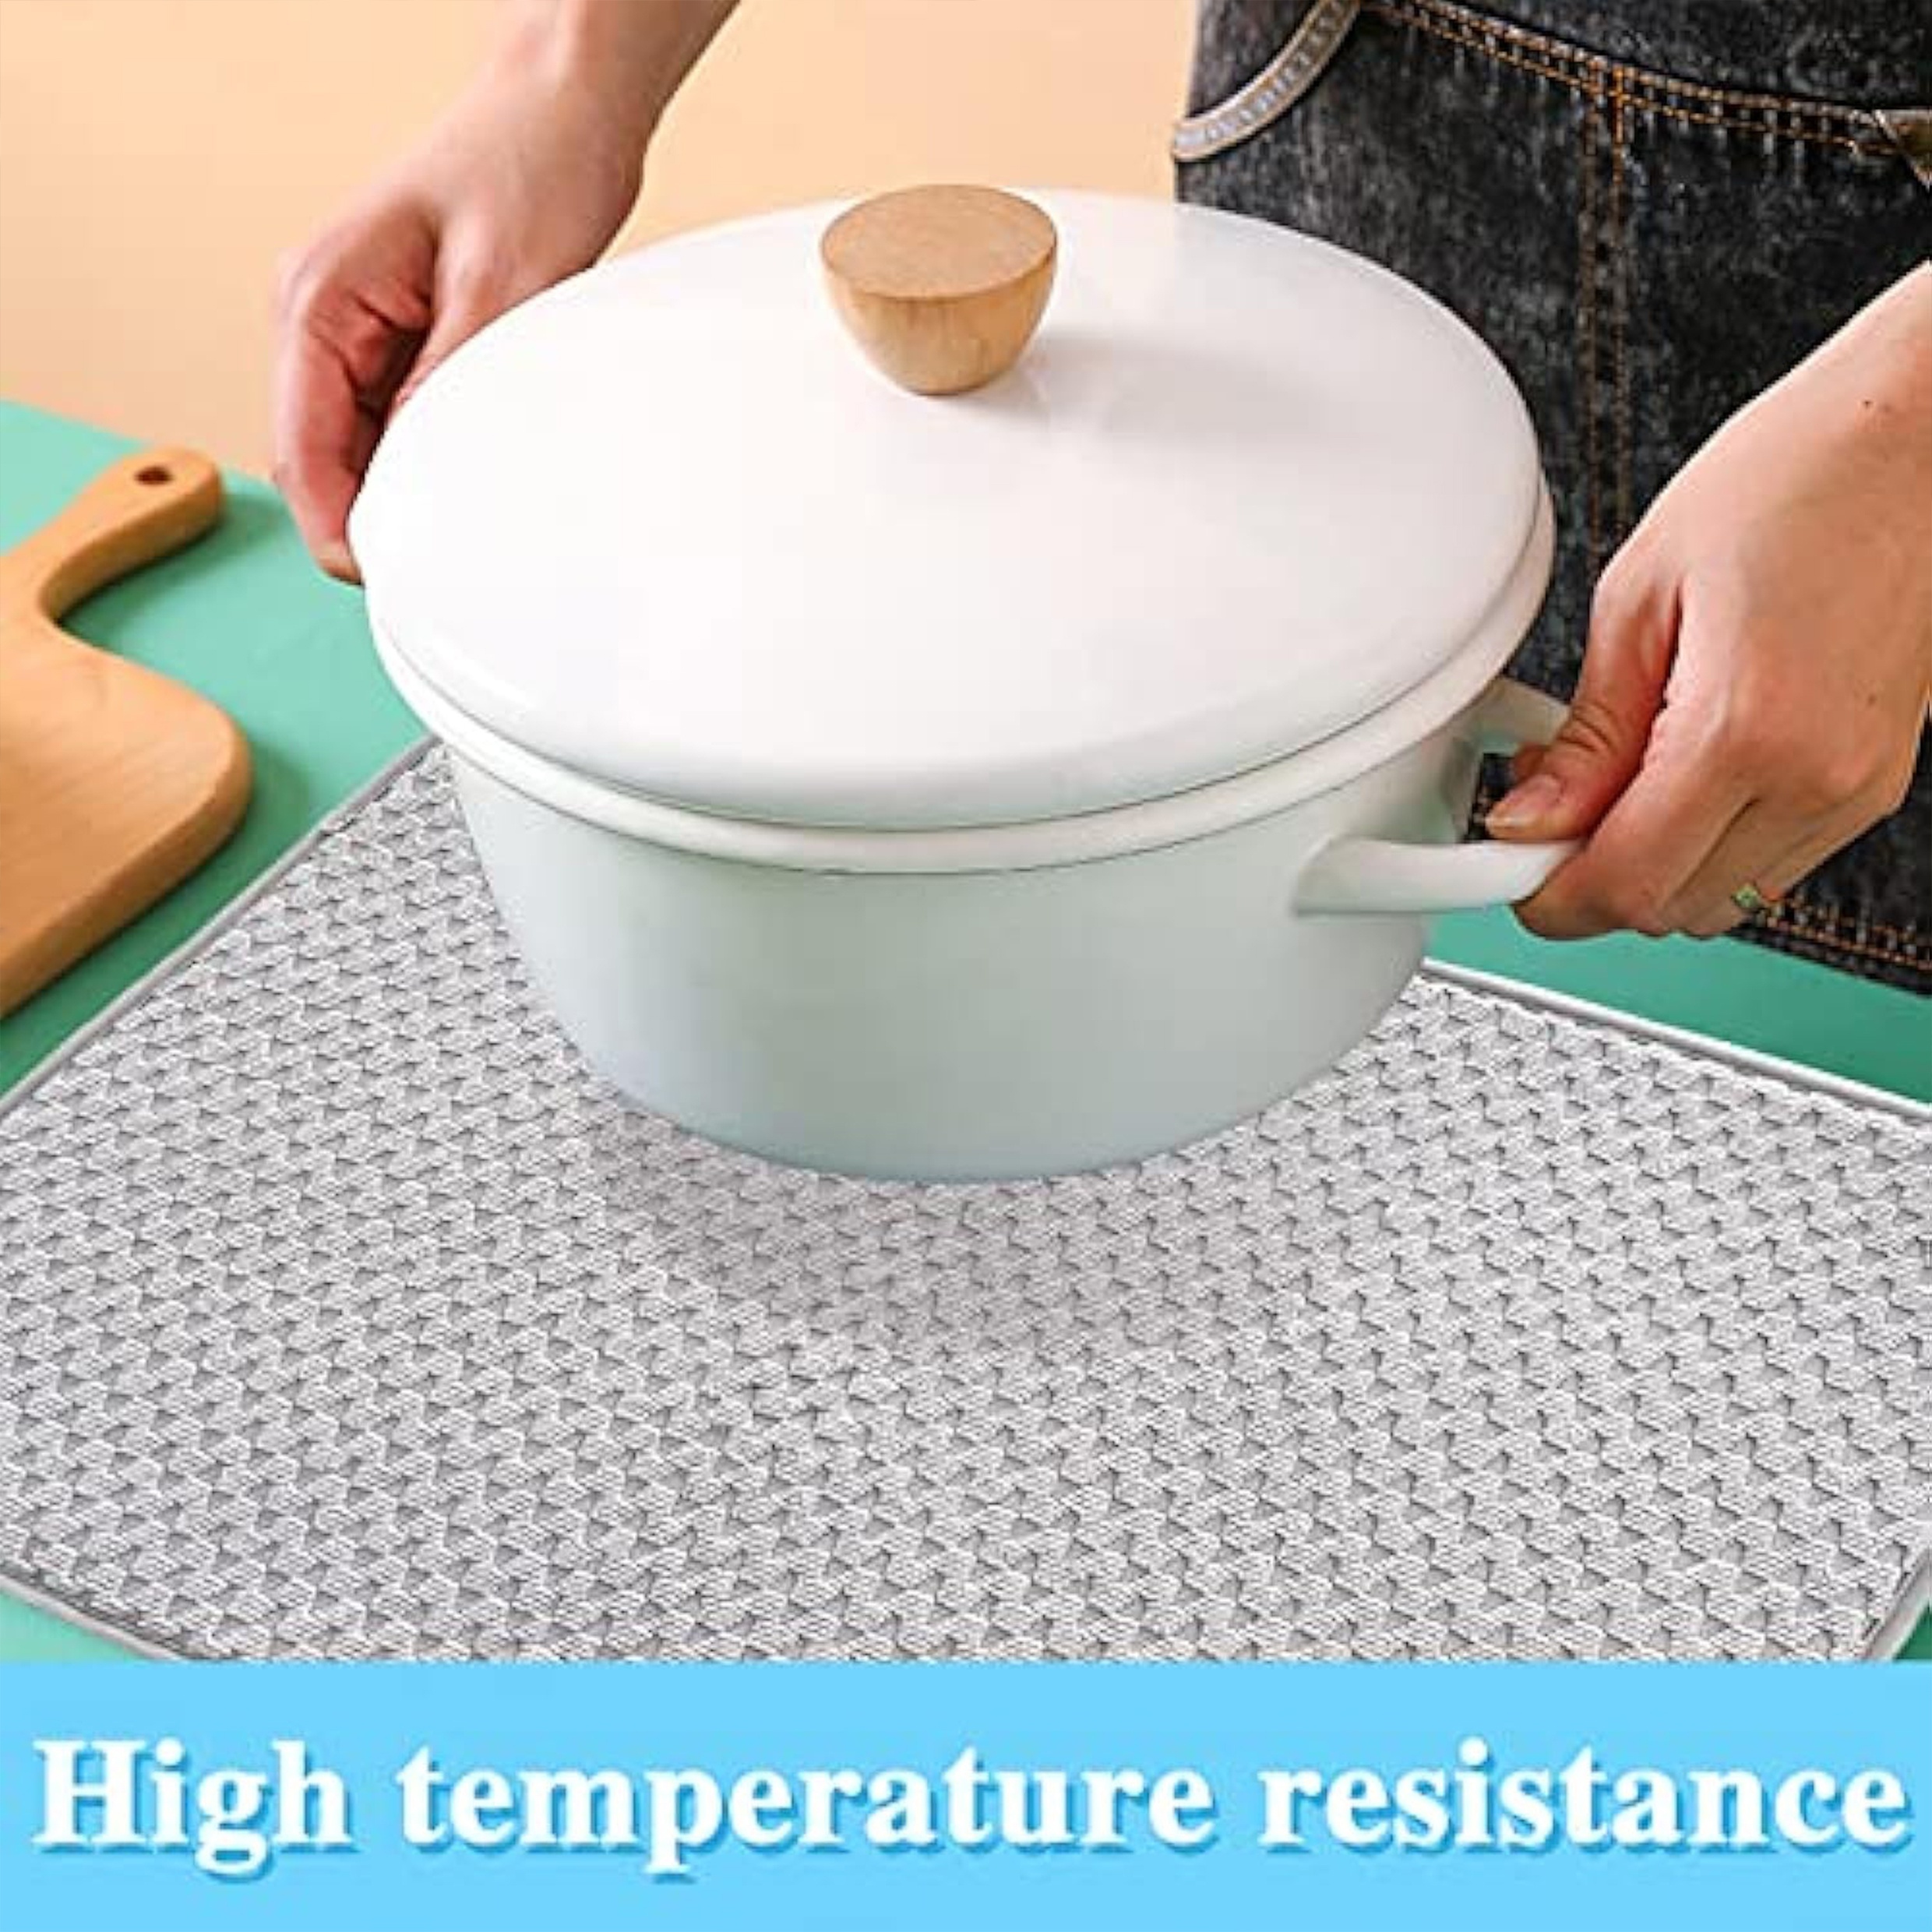 XXL Dish Mat 24 x 17 (LARGEST MAT) Microfiber Dish Drying Mat